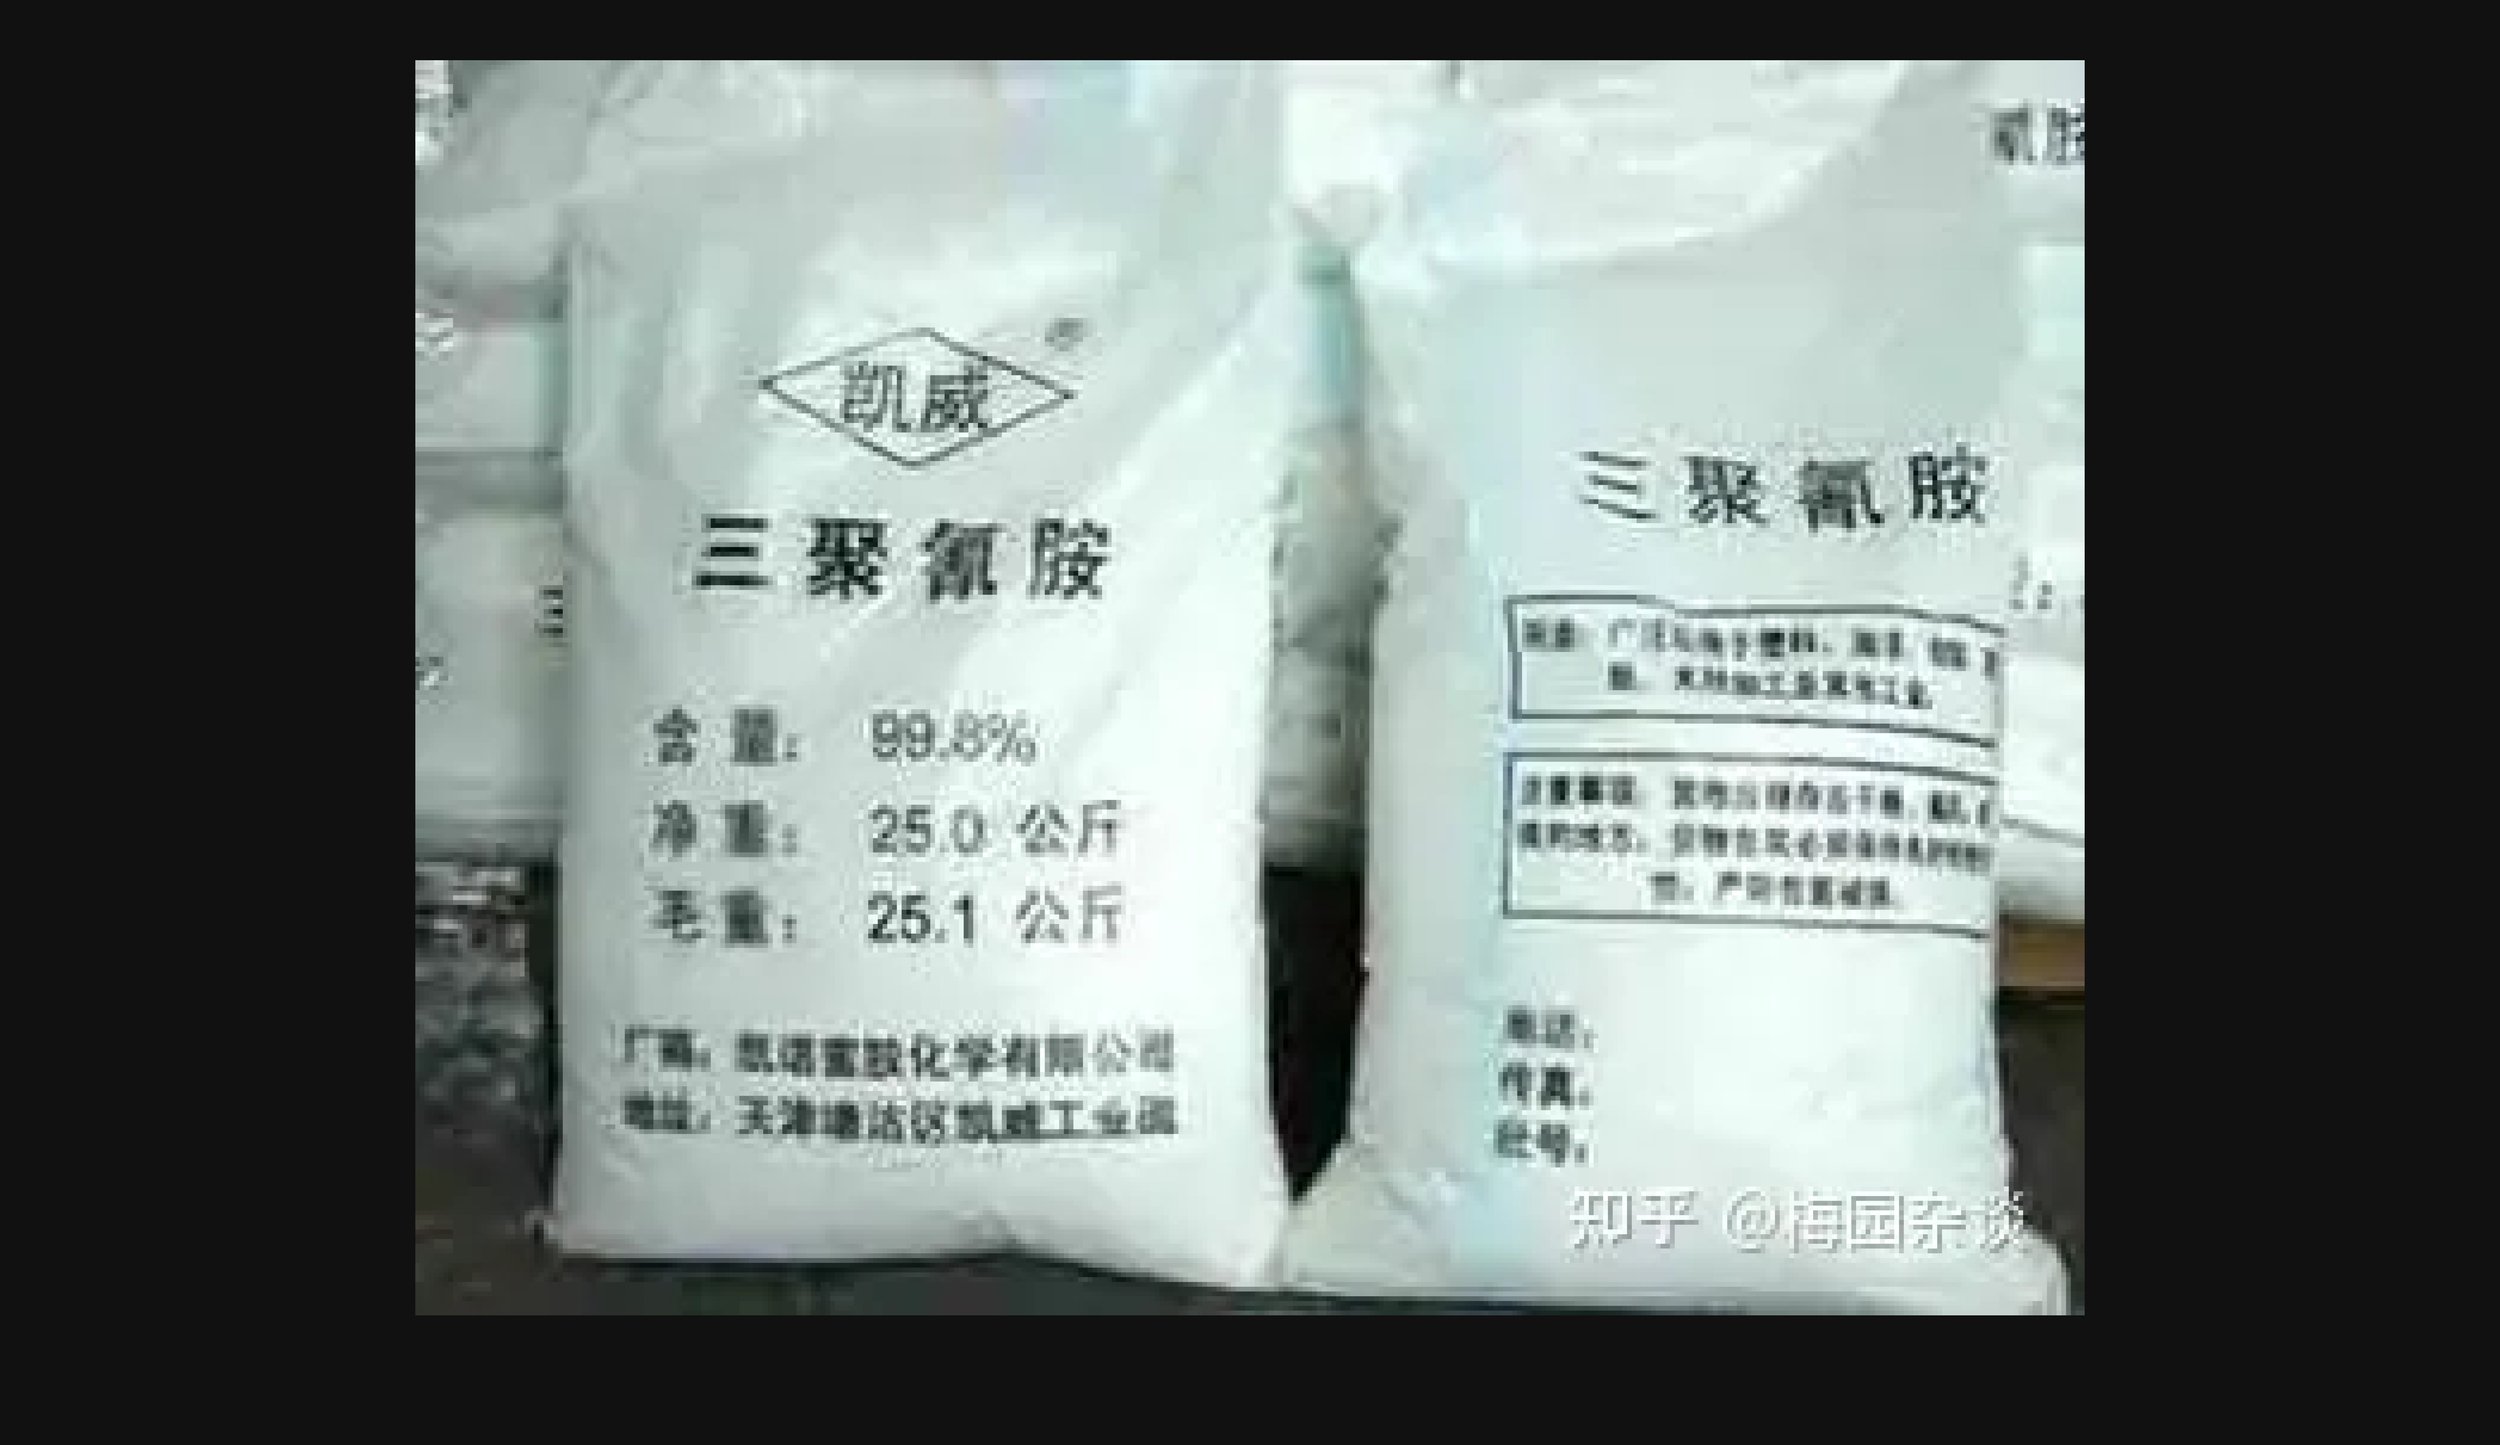  Packets of melamine powder 